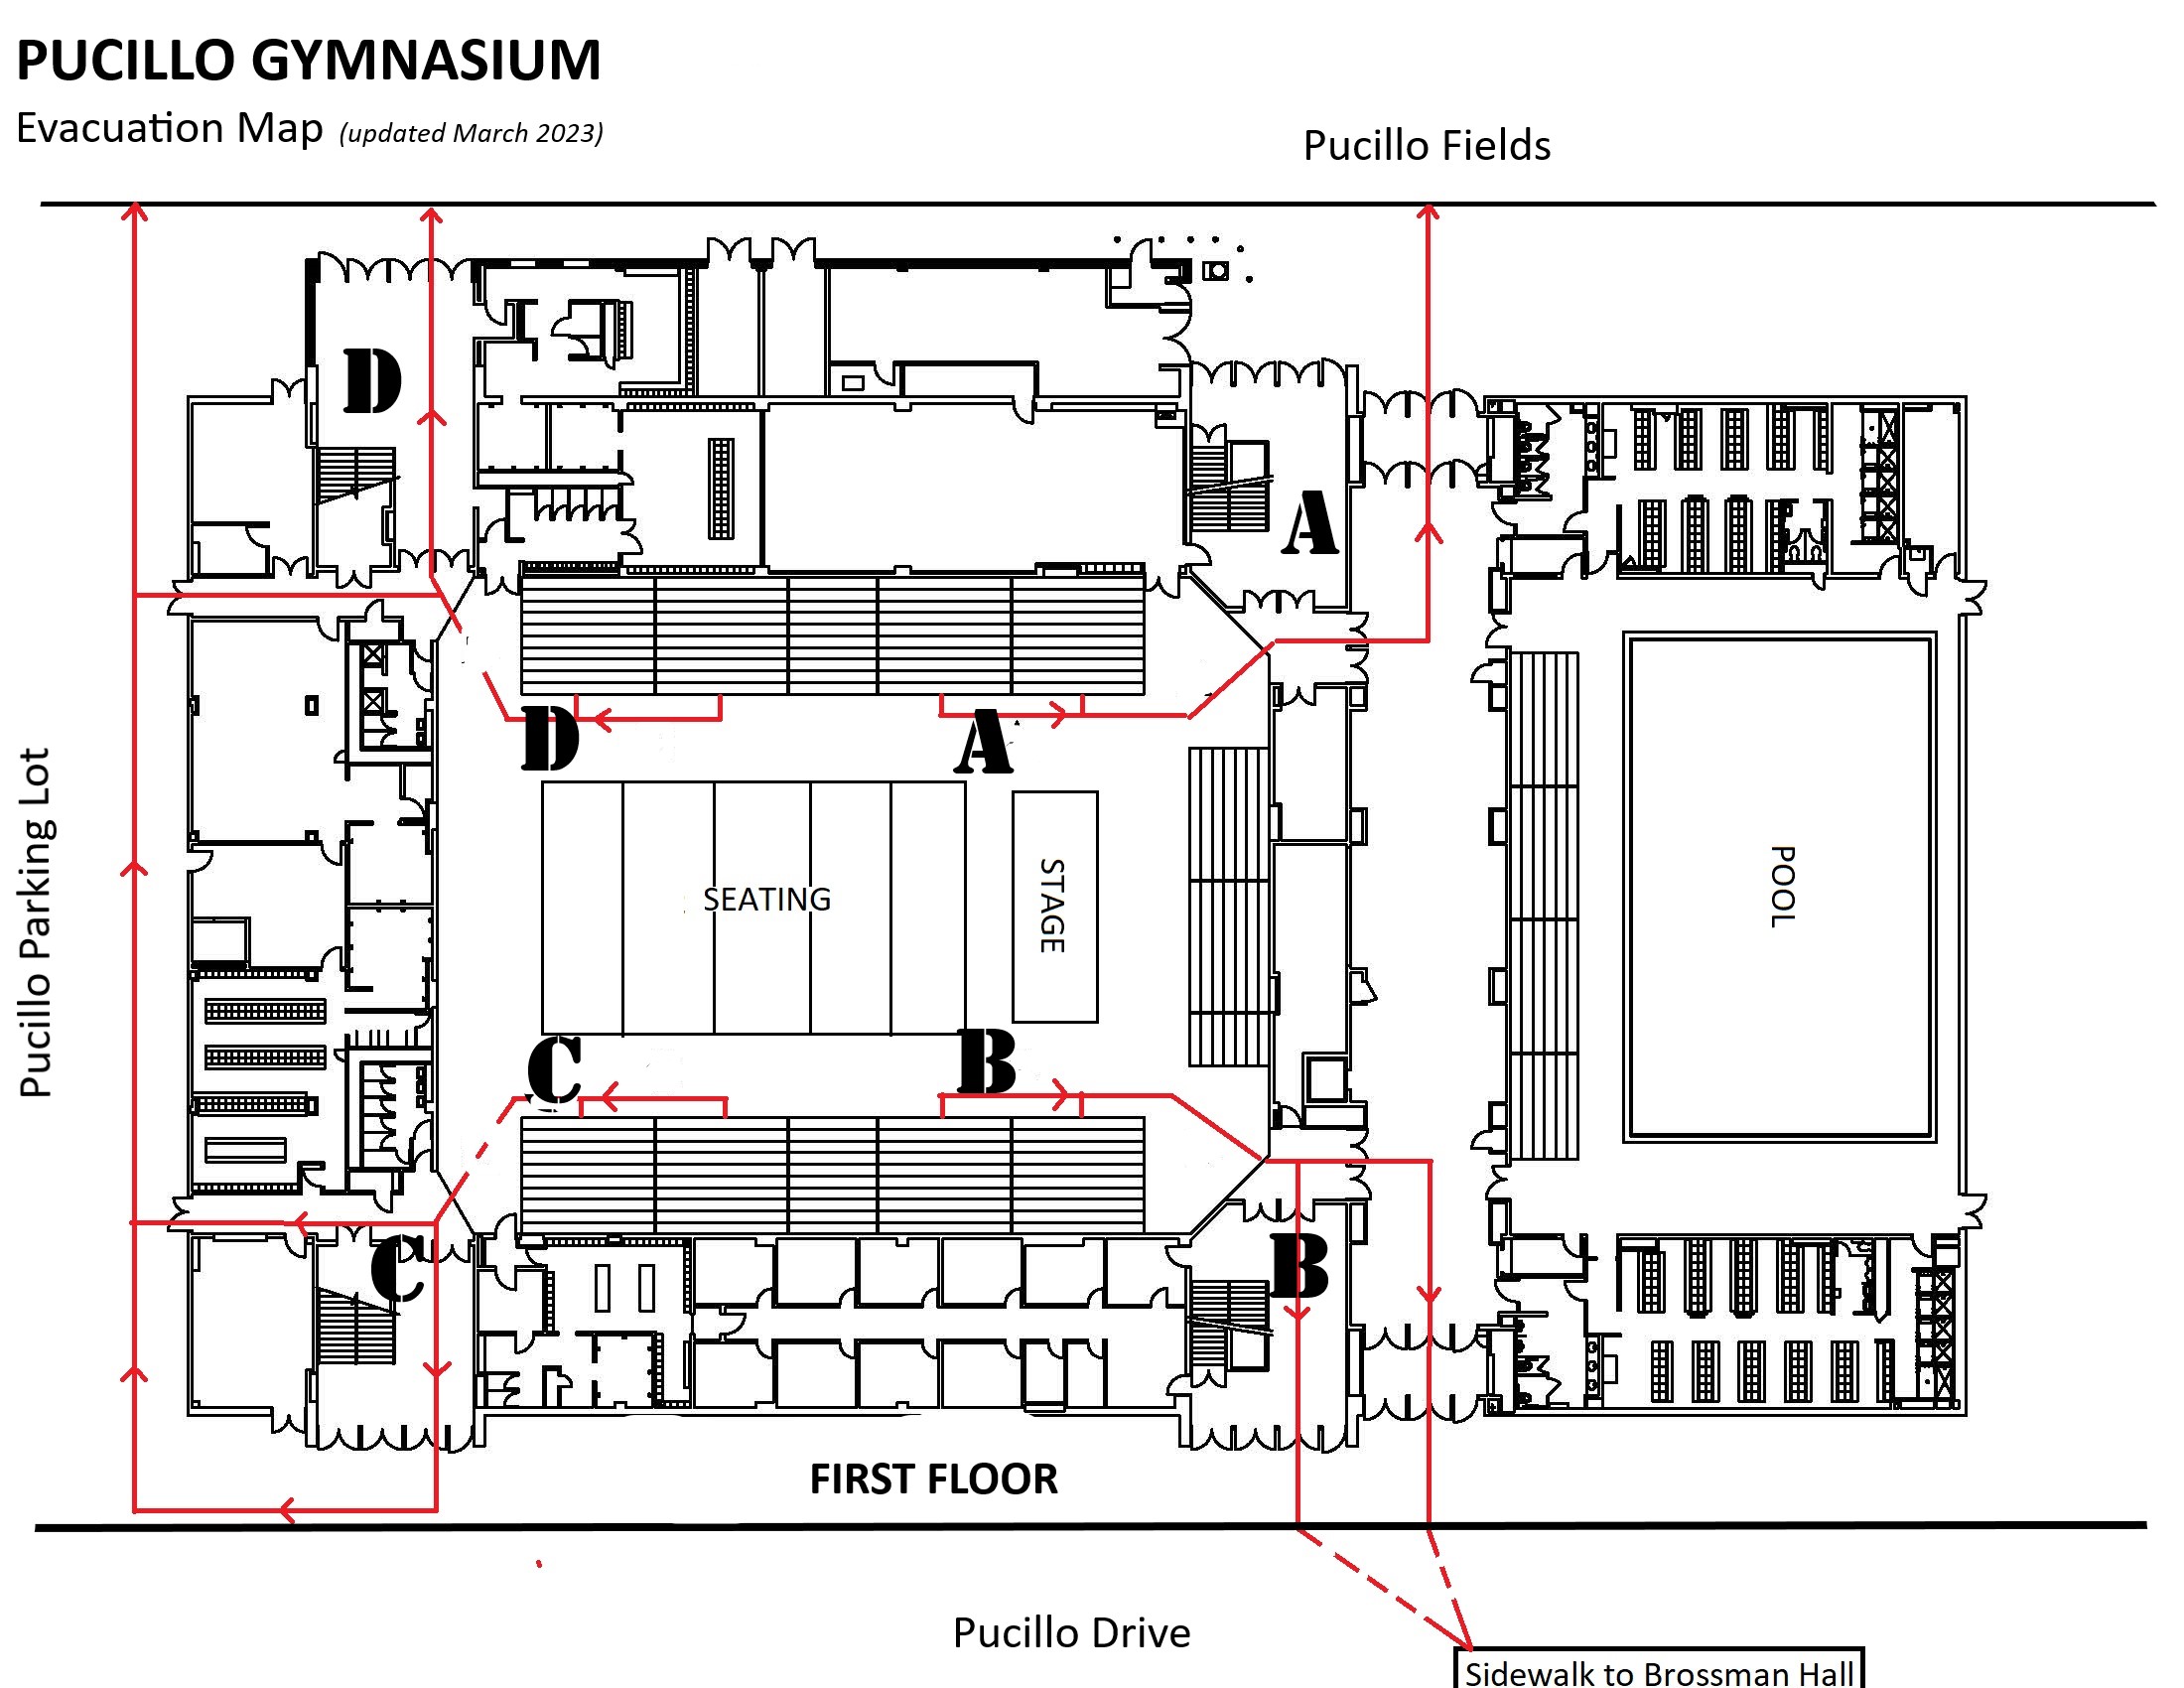 evacuation map of pucillo gym